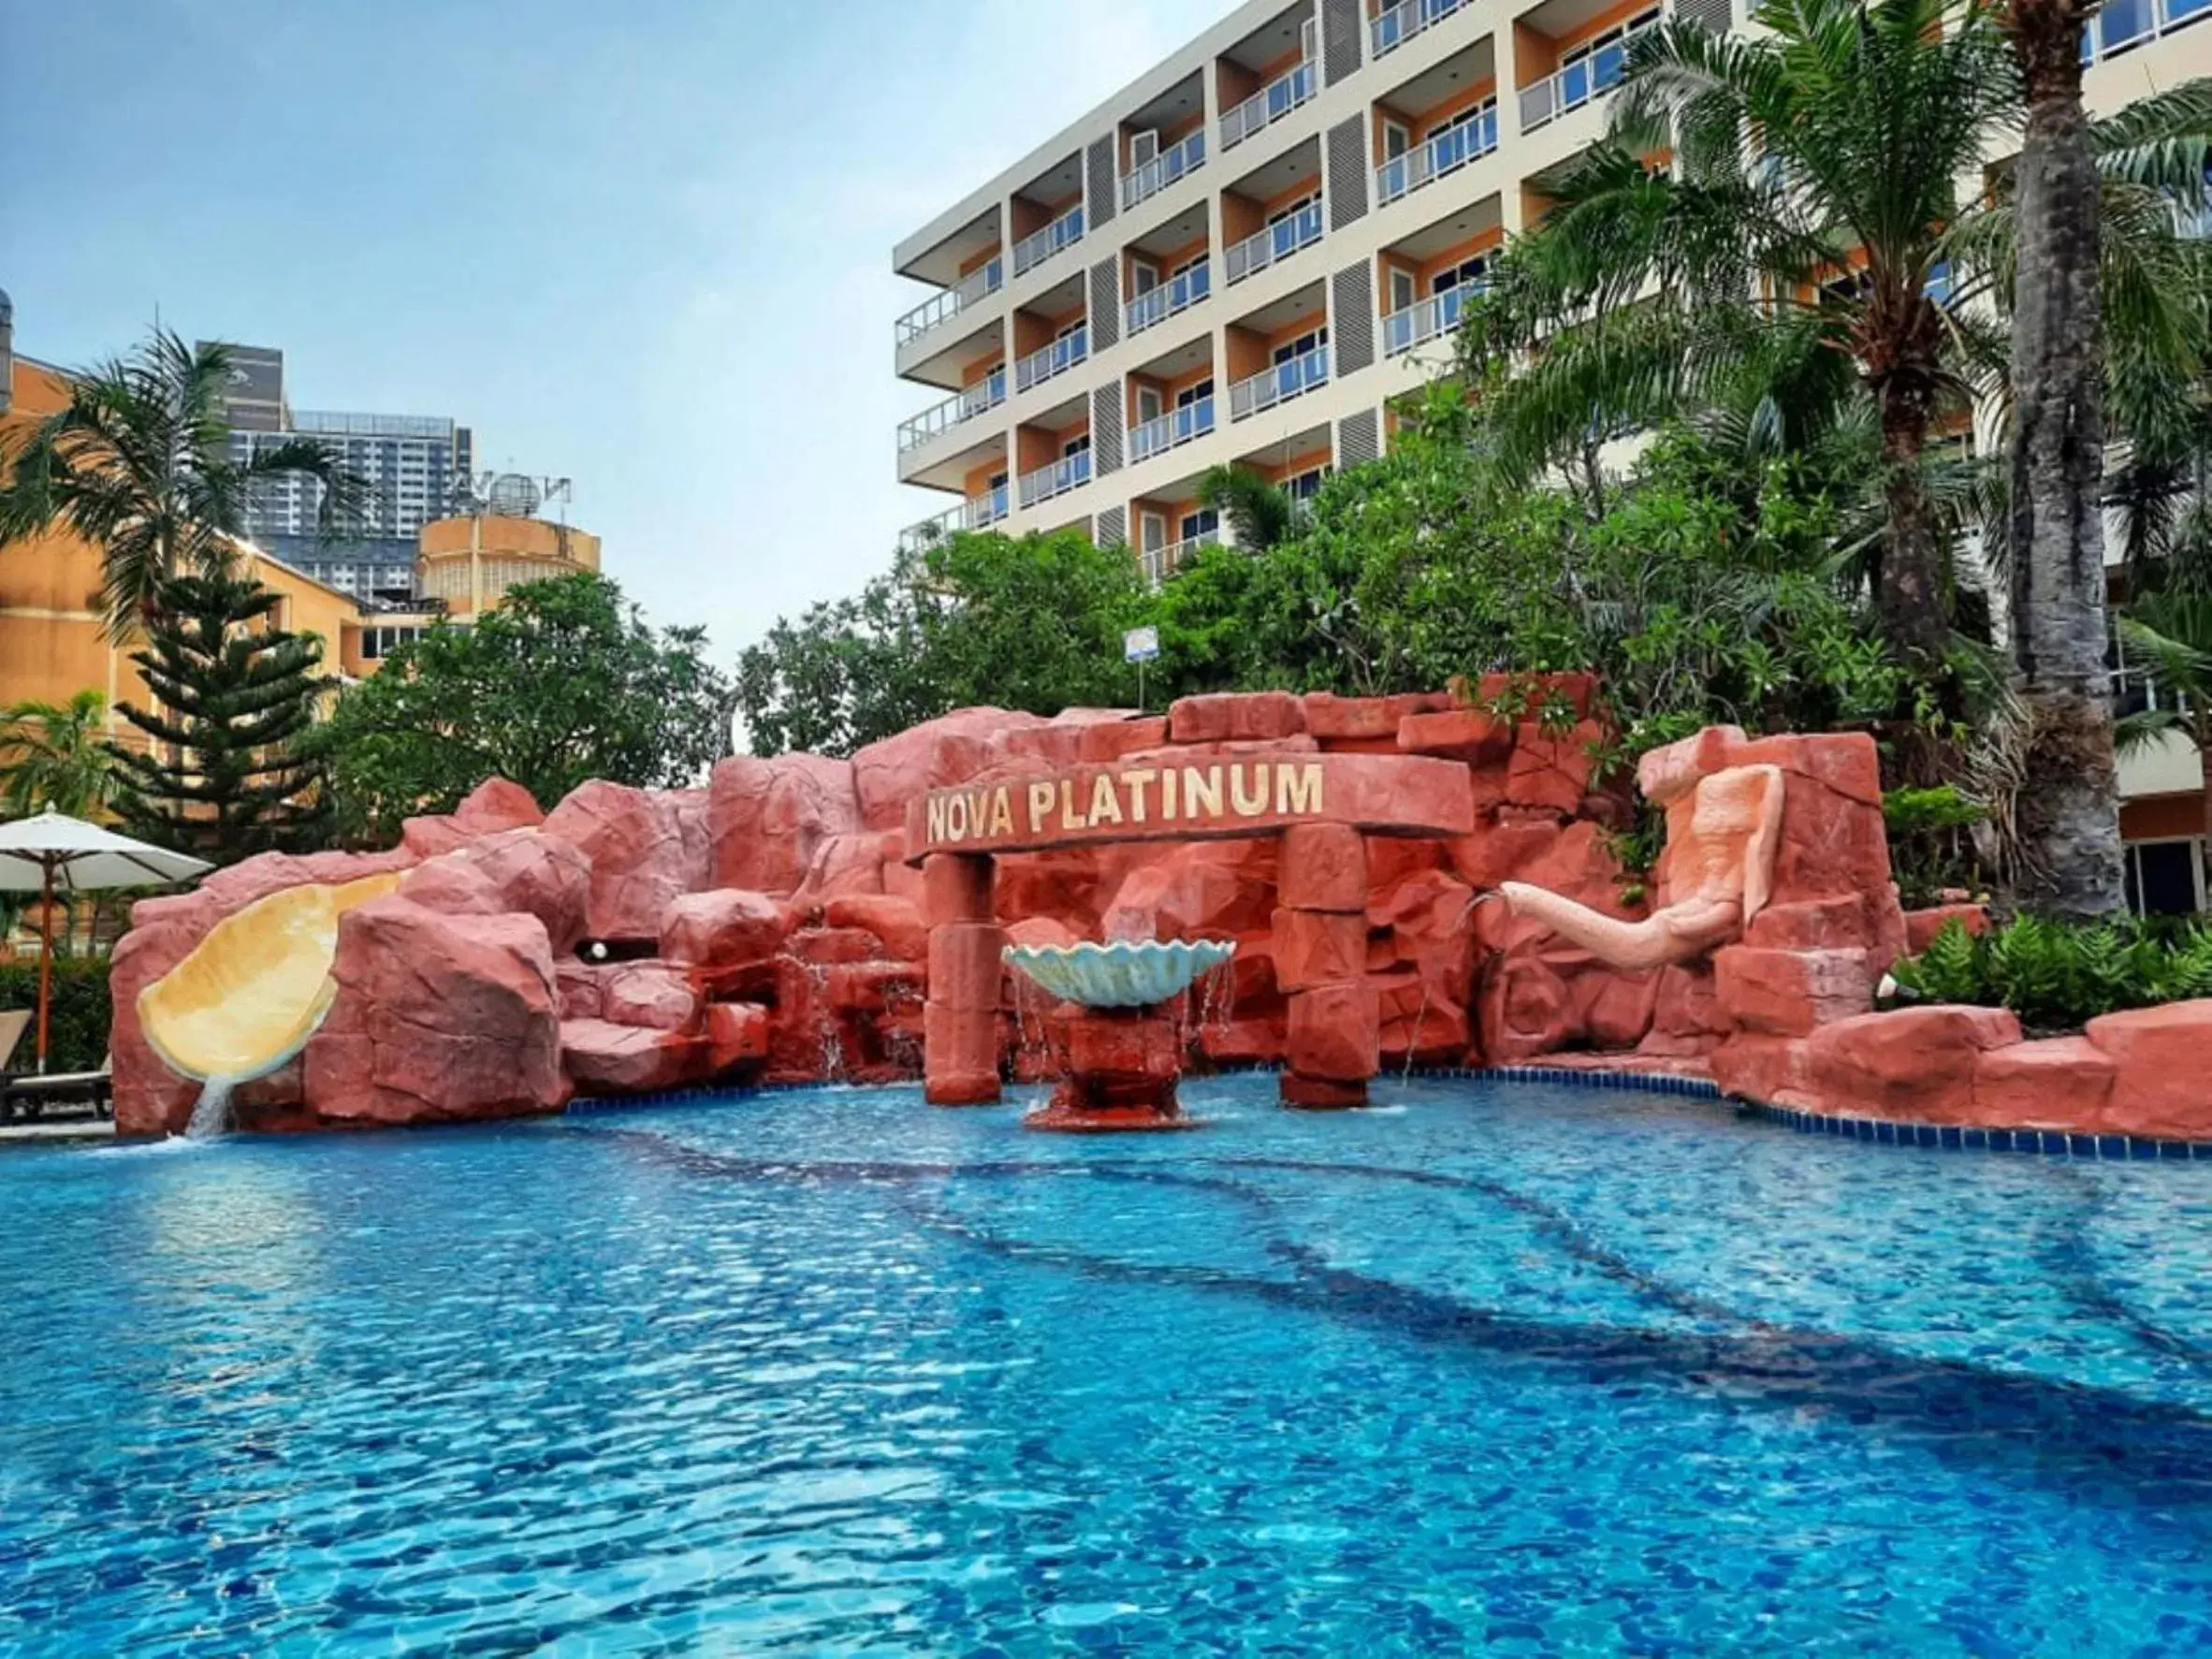 Swimming Pool in Nova Platinum Hotel